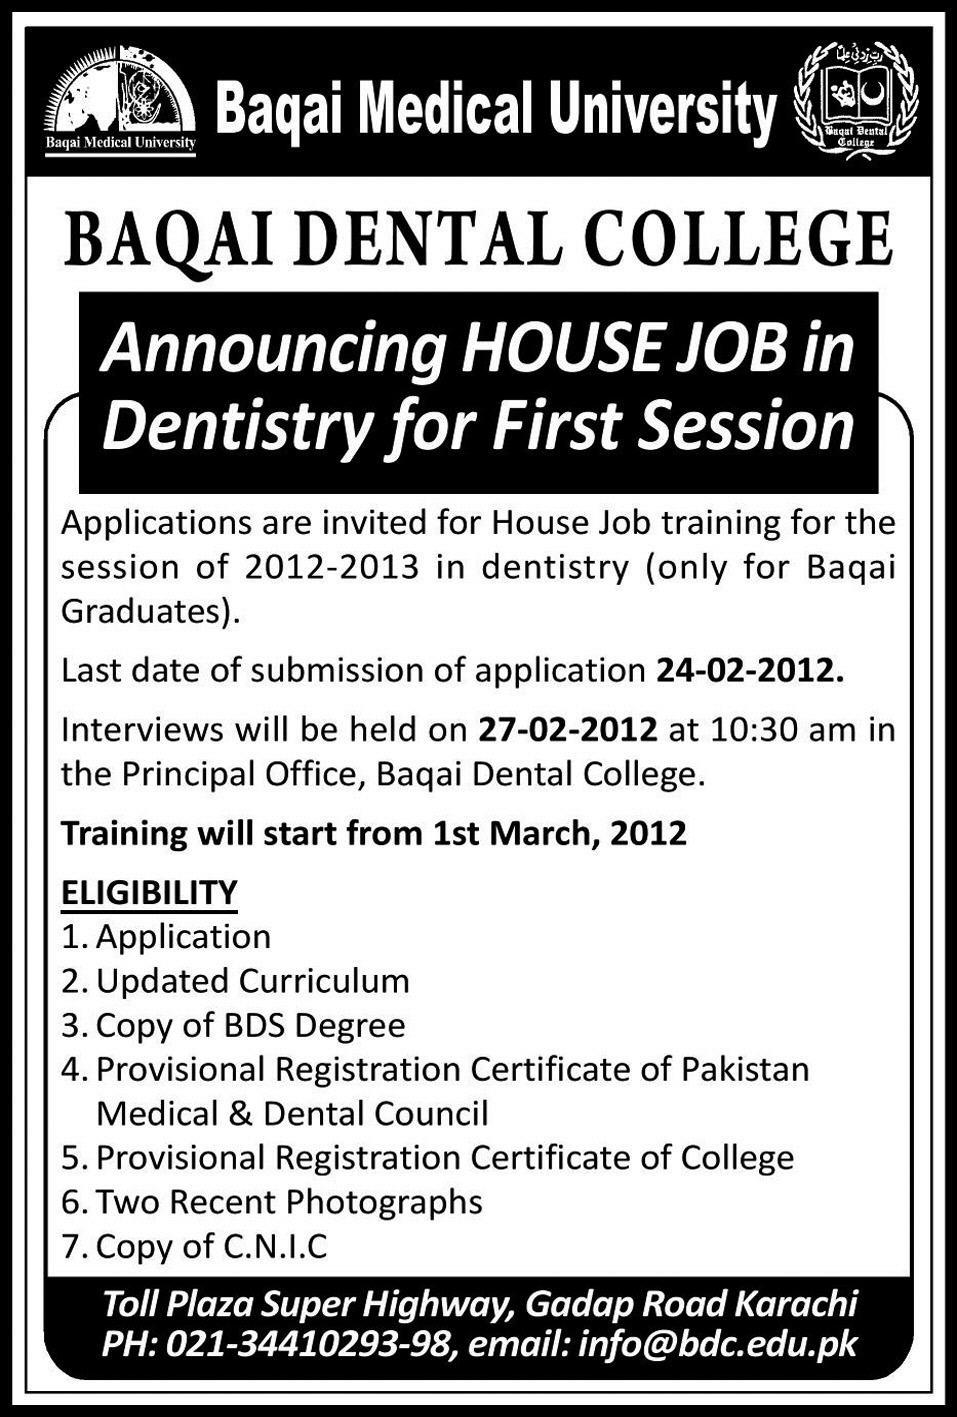 Baqai Medical University House Job Opportunity